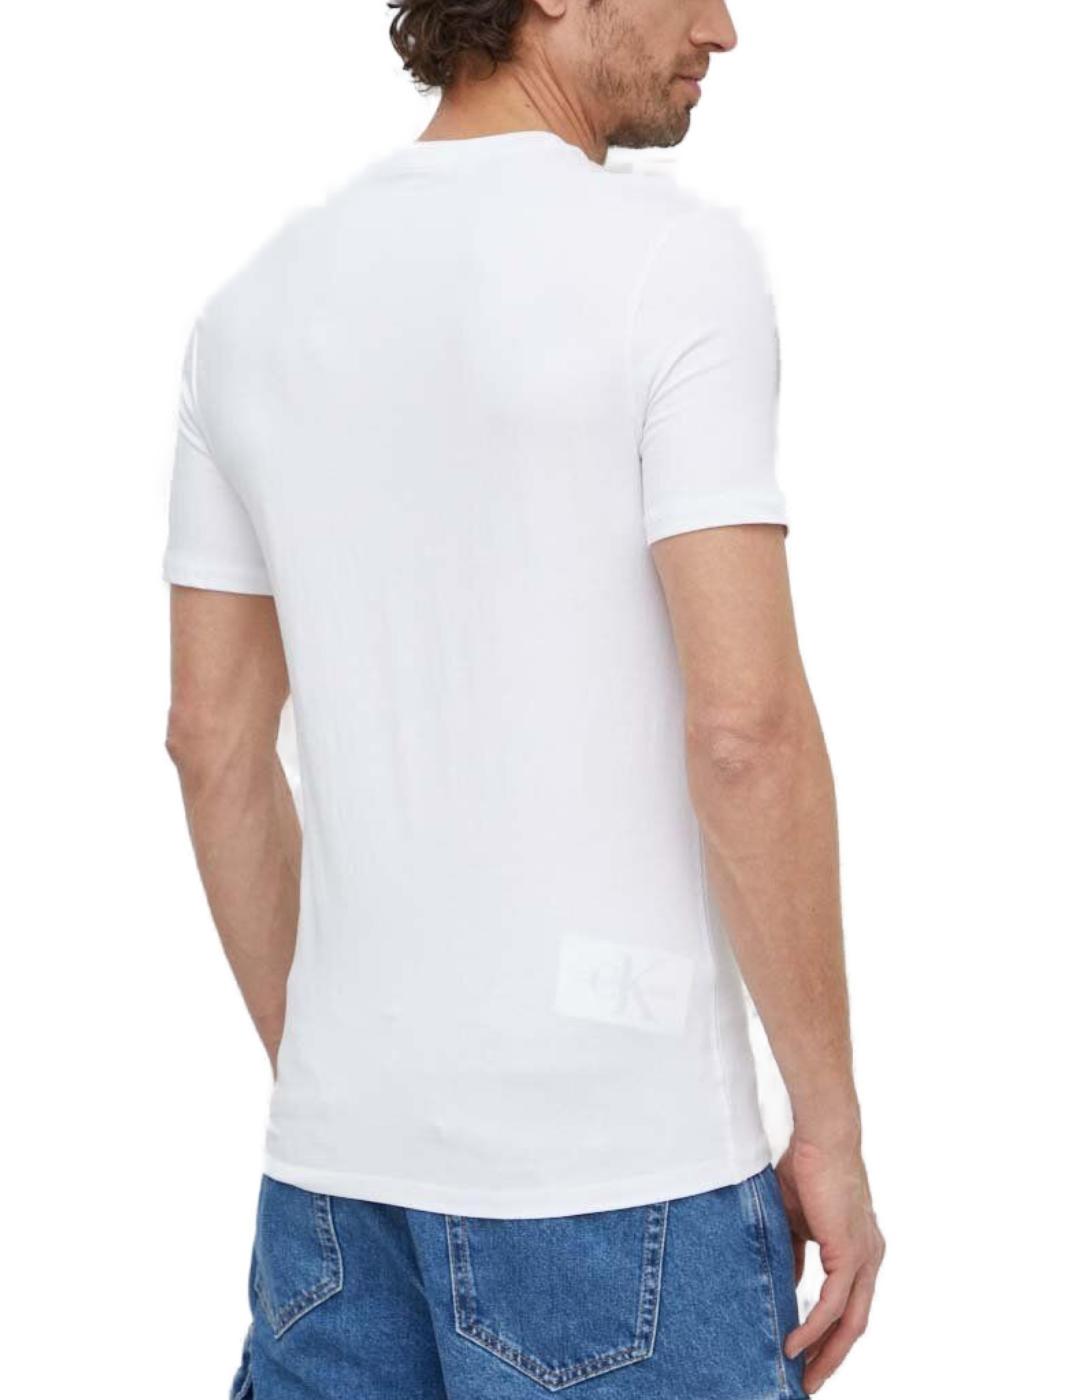 Camiseta Guess 1981 blanco manga corta para hombre